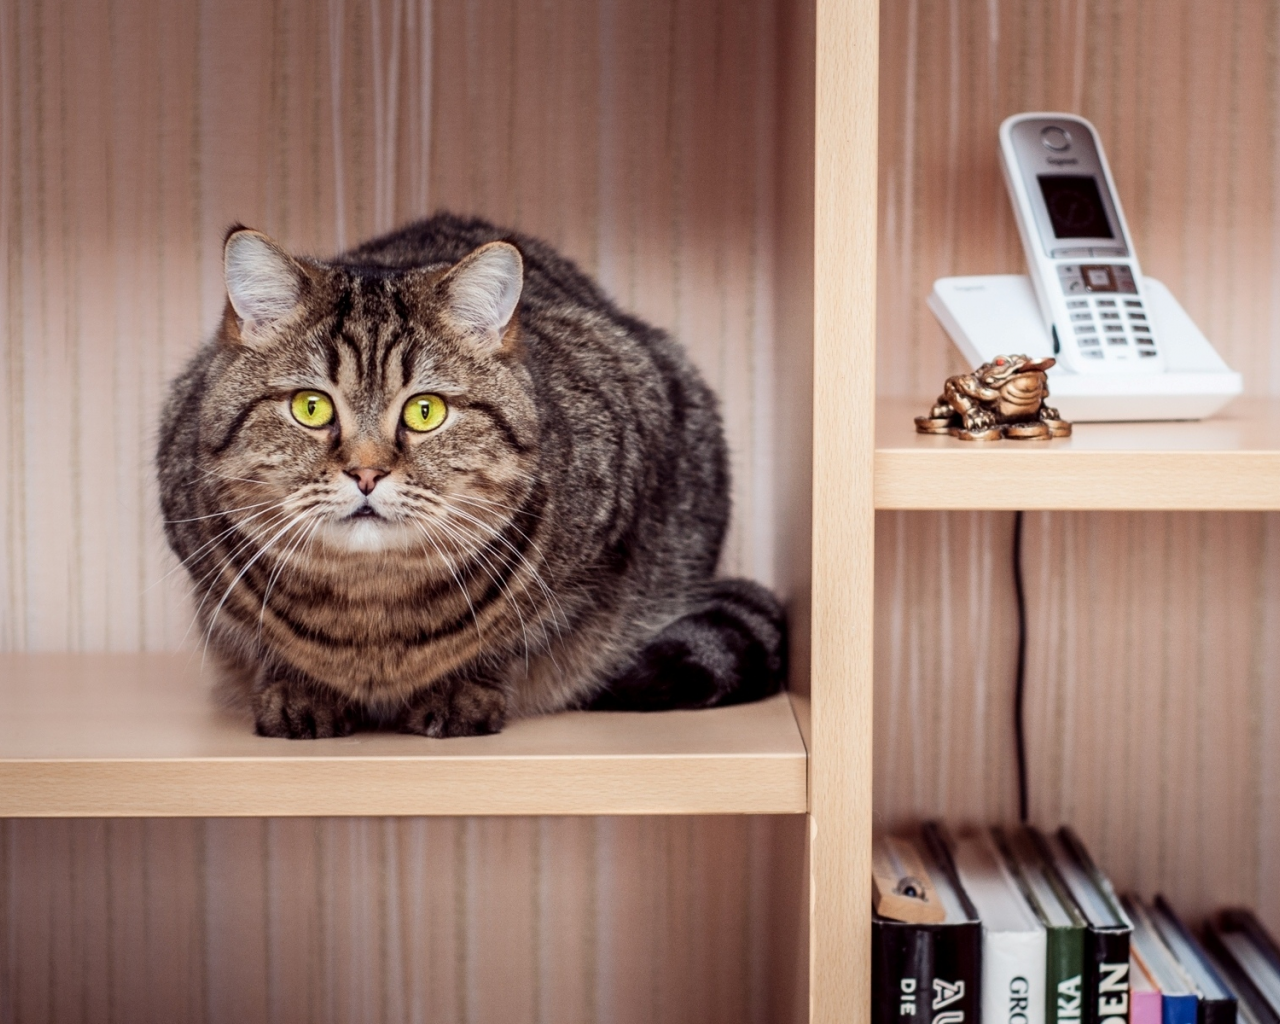 кот, книги, сидит, телефон, полки, кошка, полосатая, шкаф